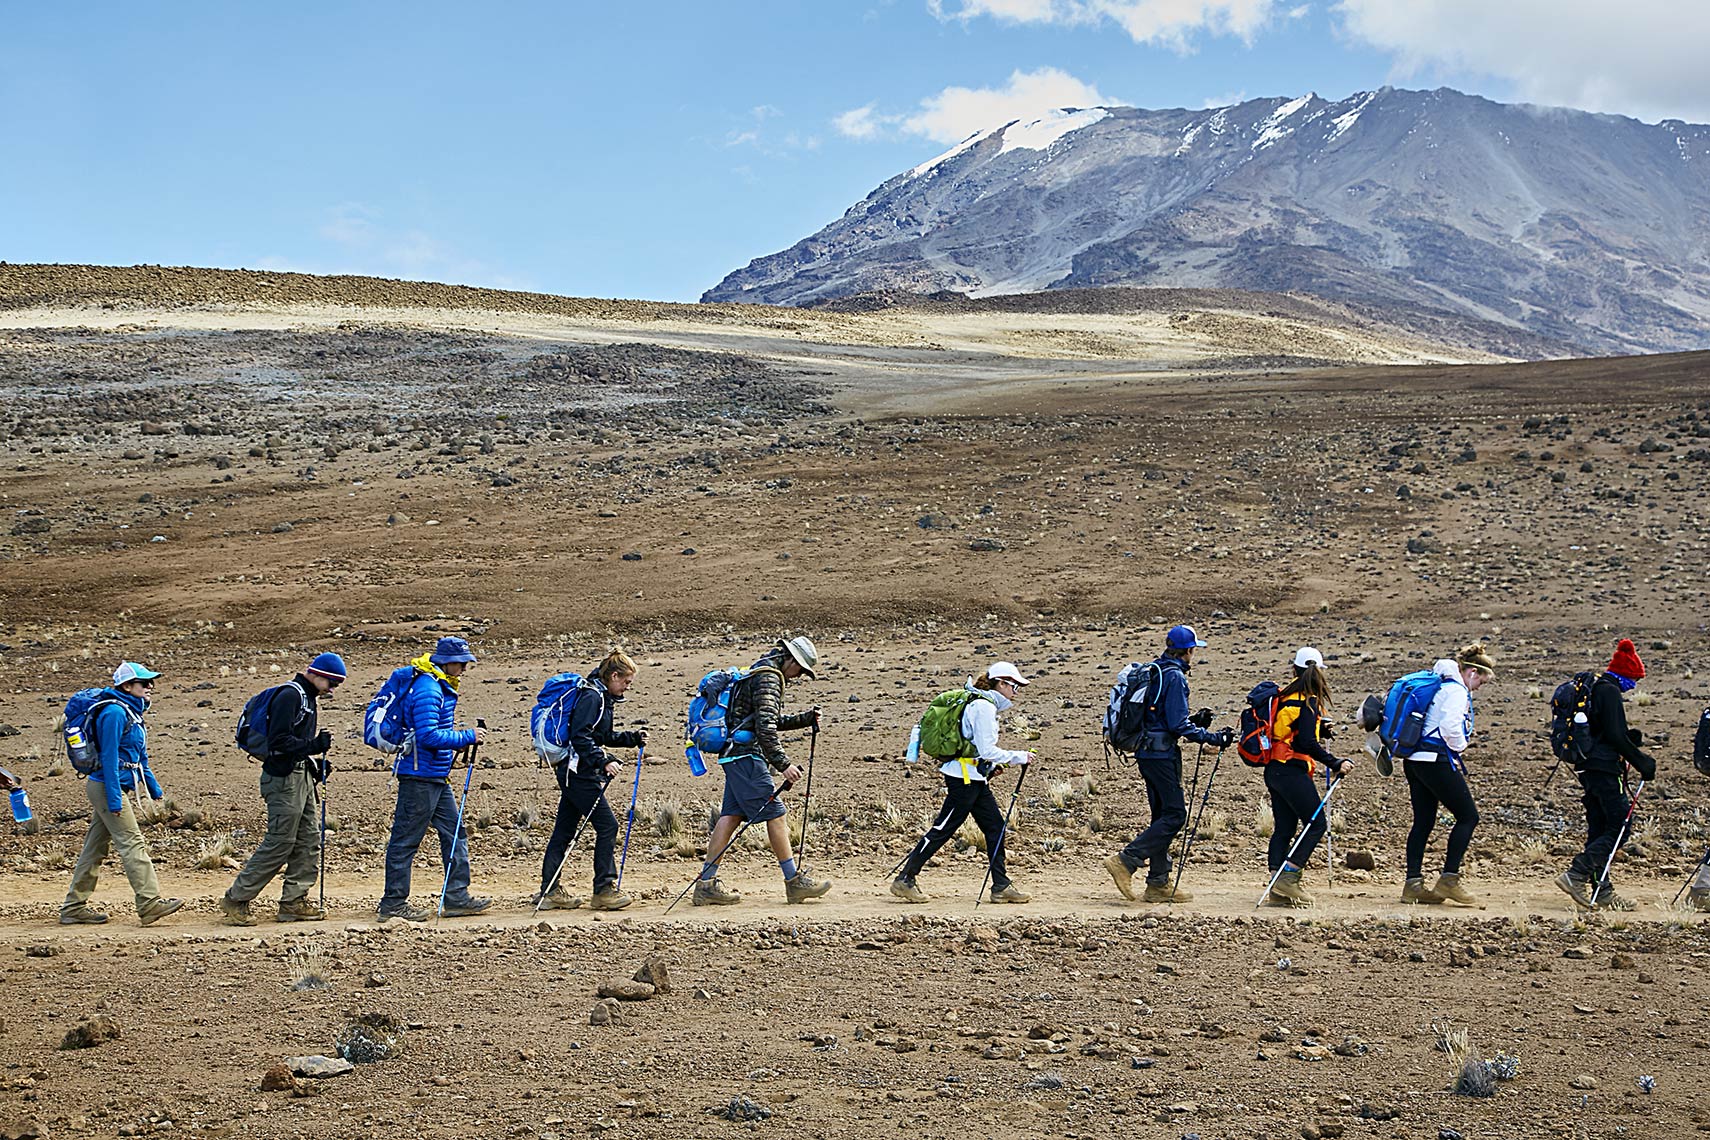 Philadelphia Photographer STEVE BOYLE - Climbing Mount Kilimanjaro